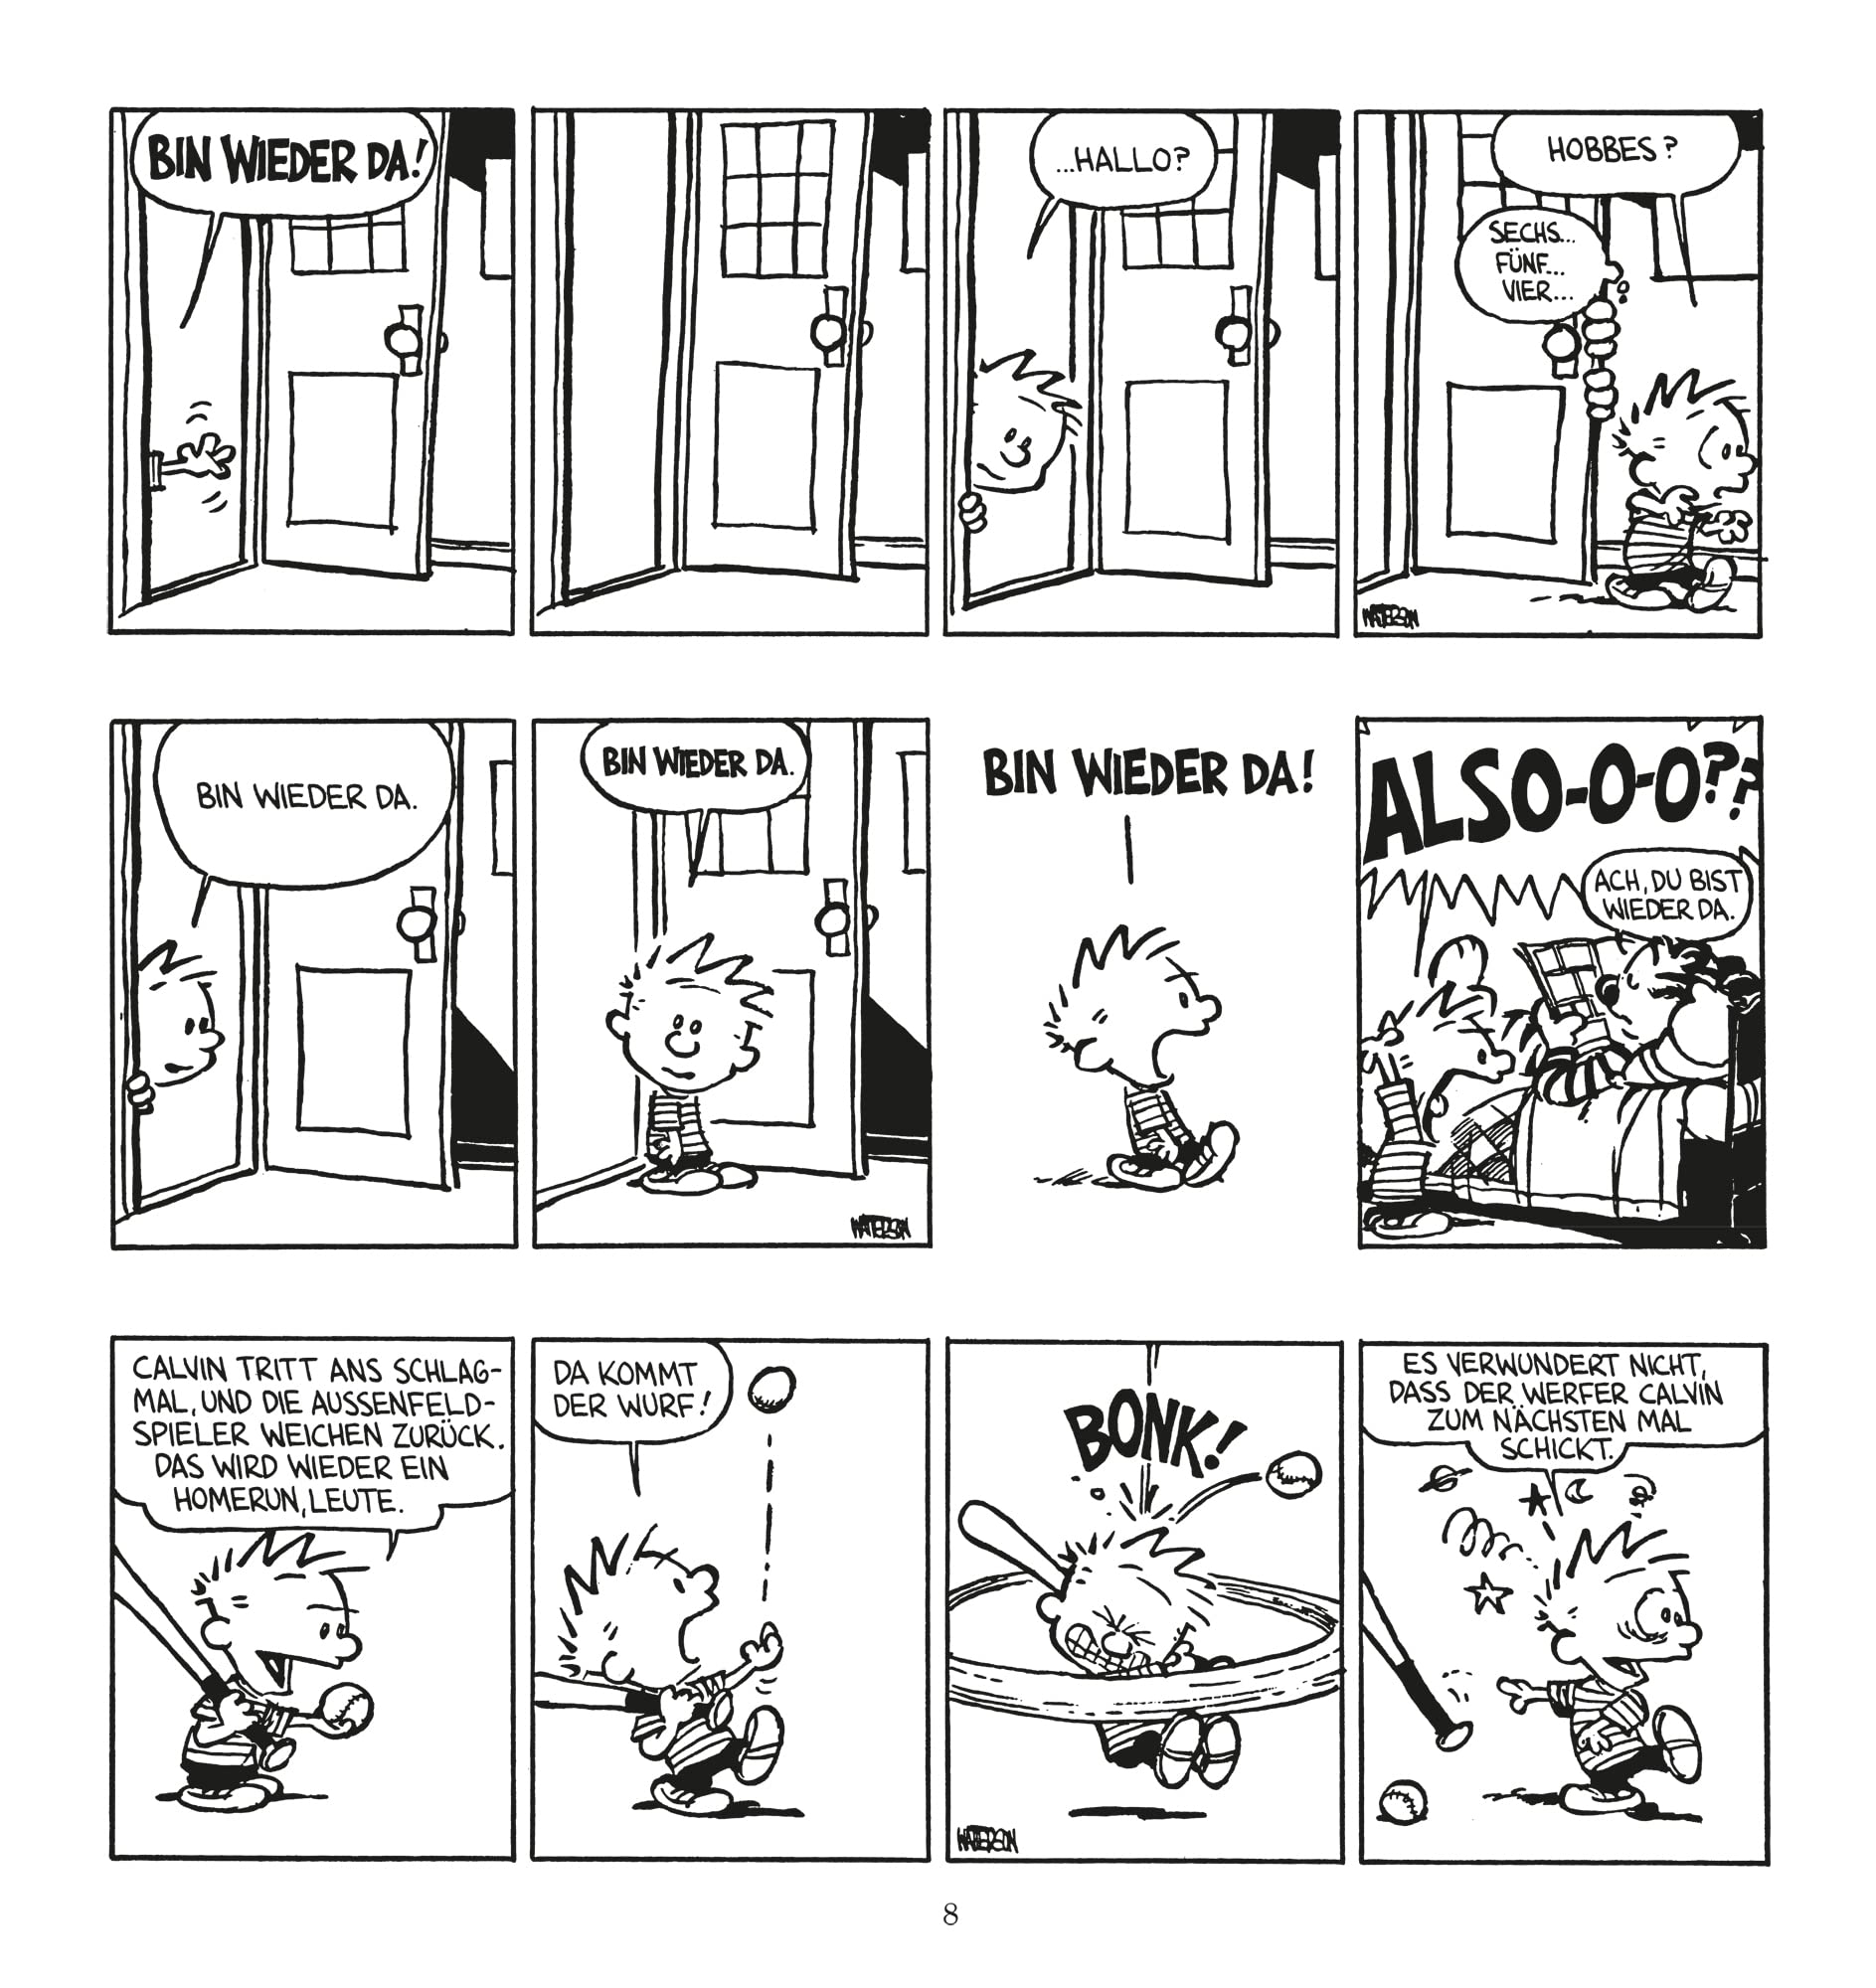 Calvin & Hobbes 03 - Wir wandern aus!